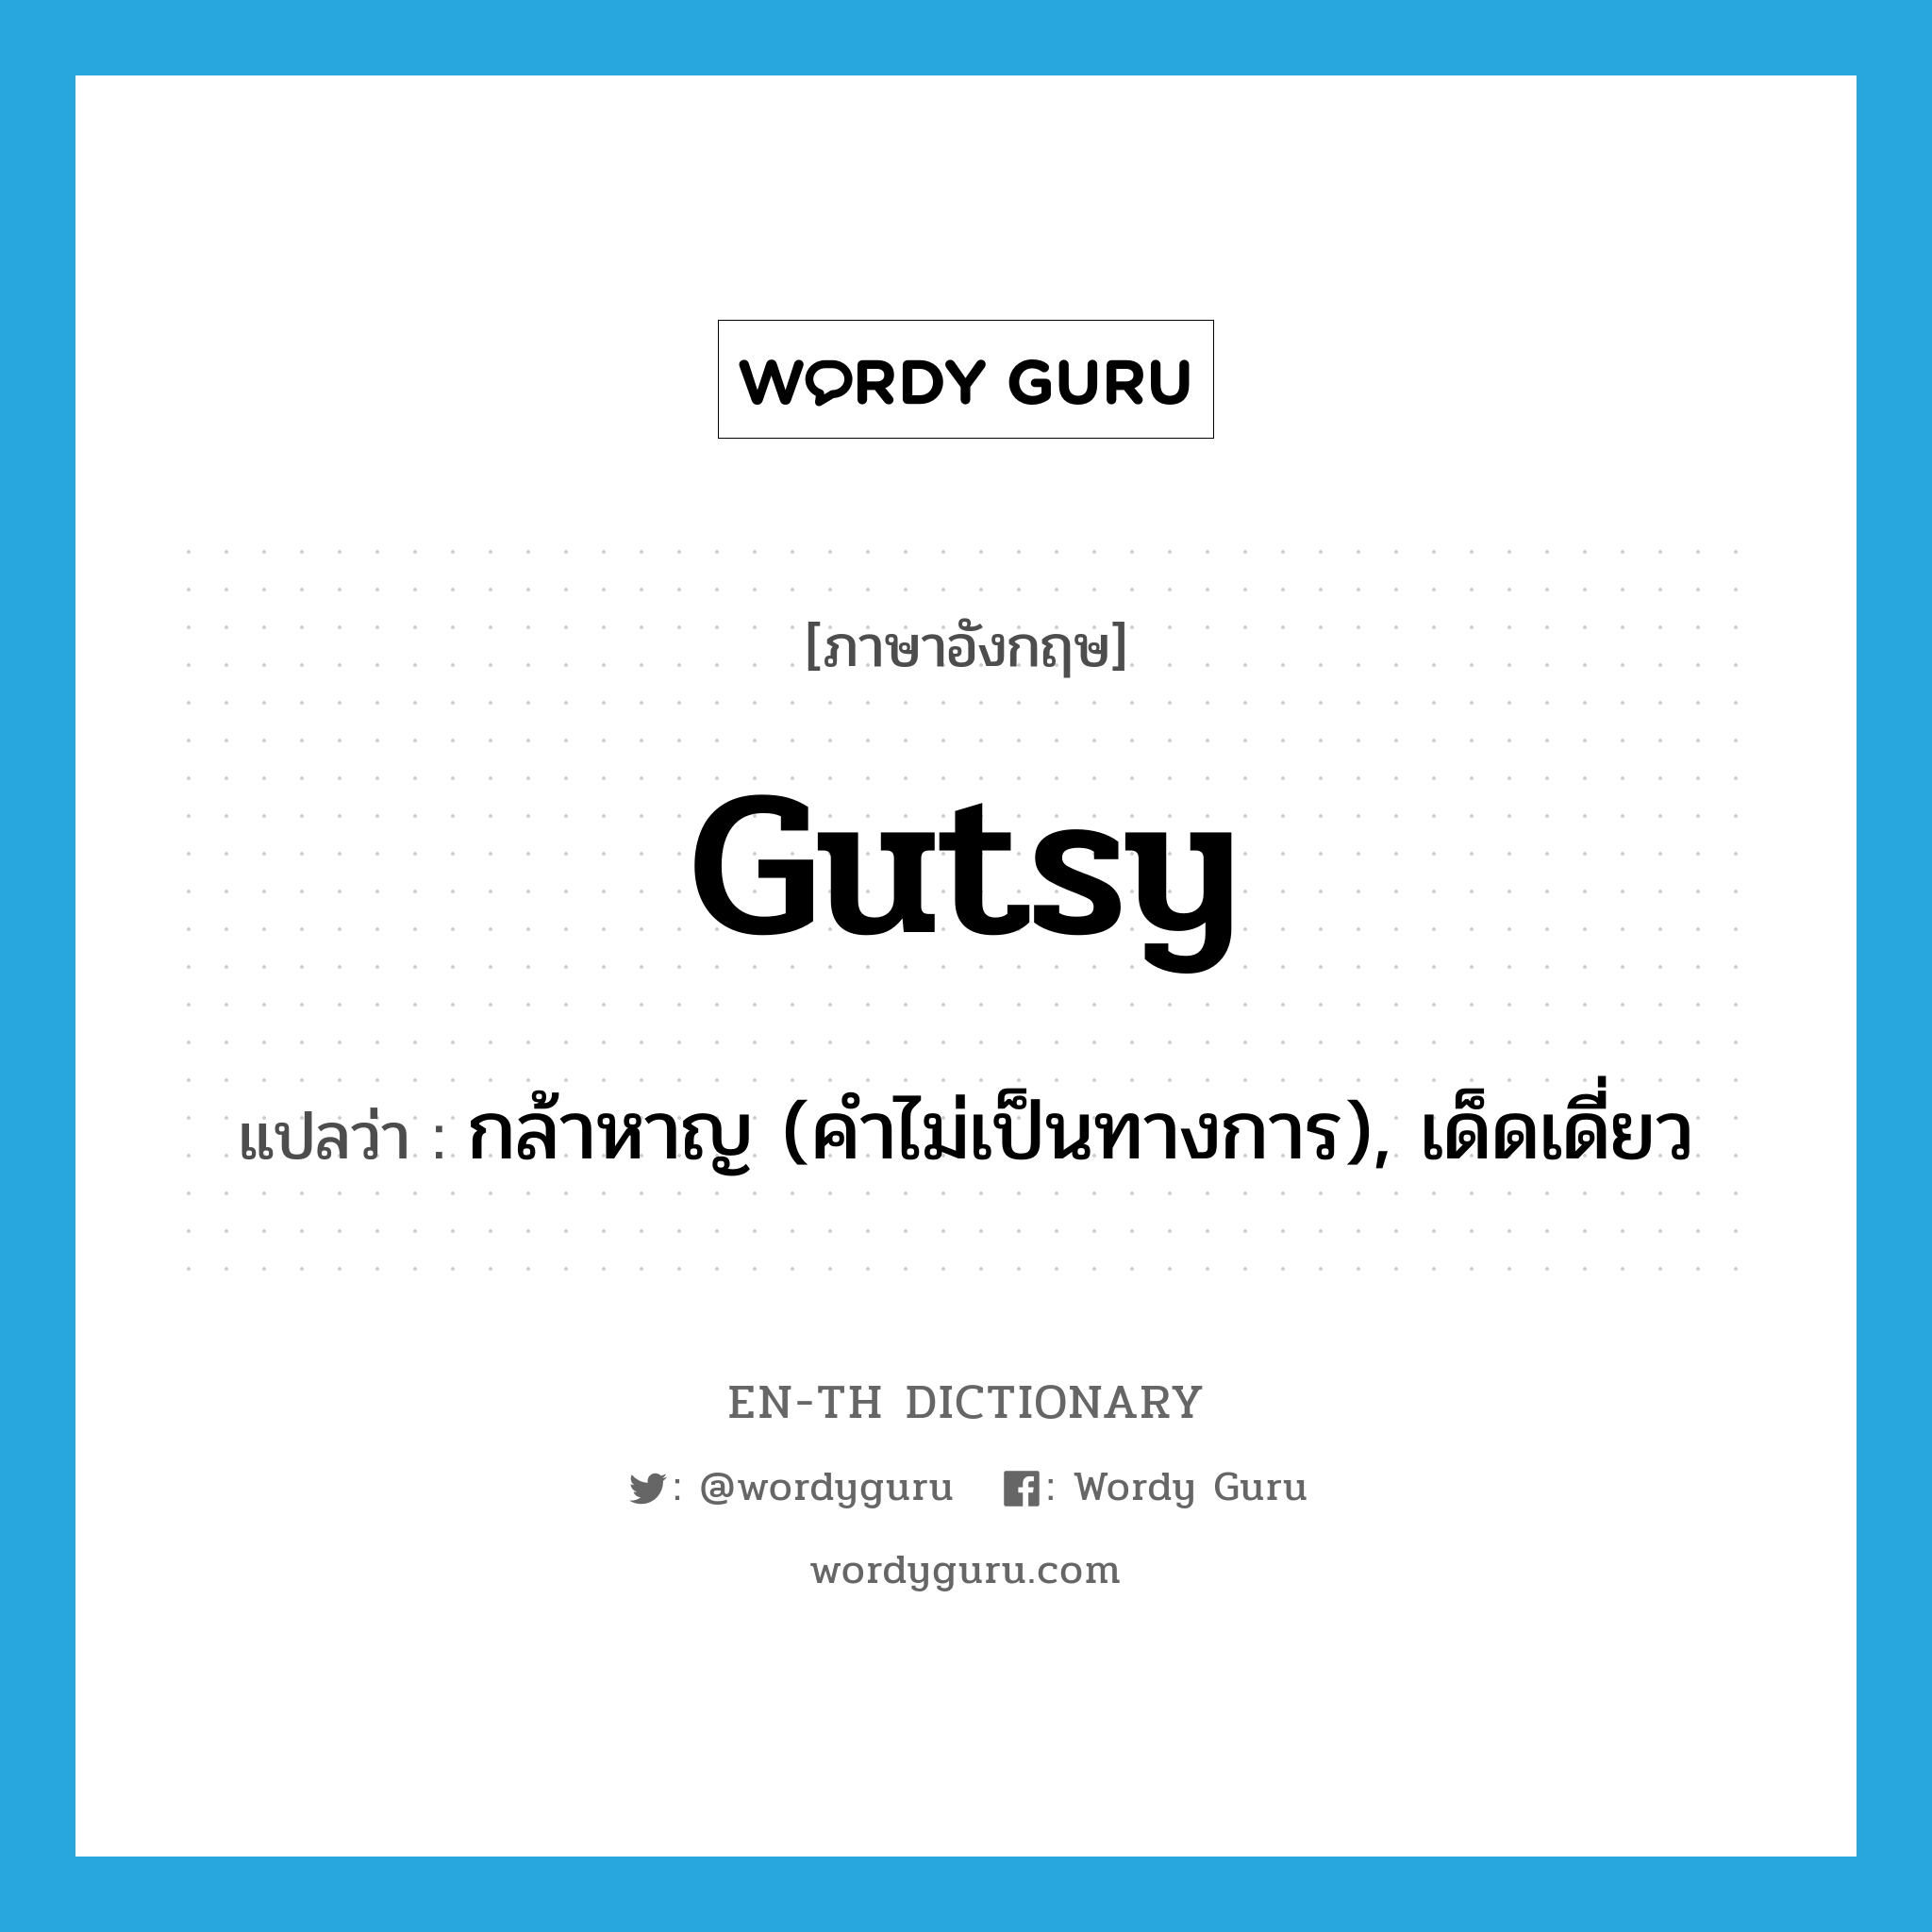 gutsy